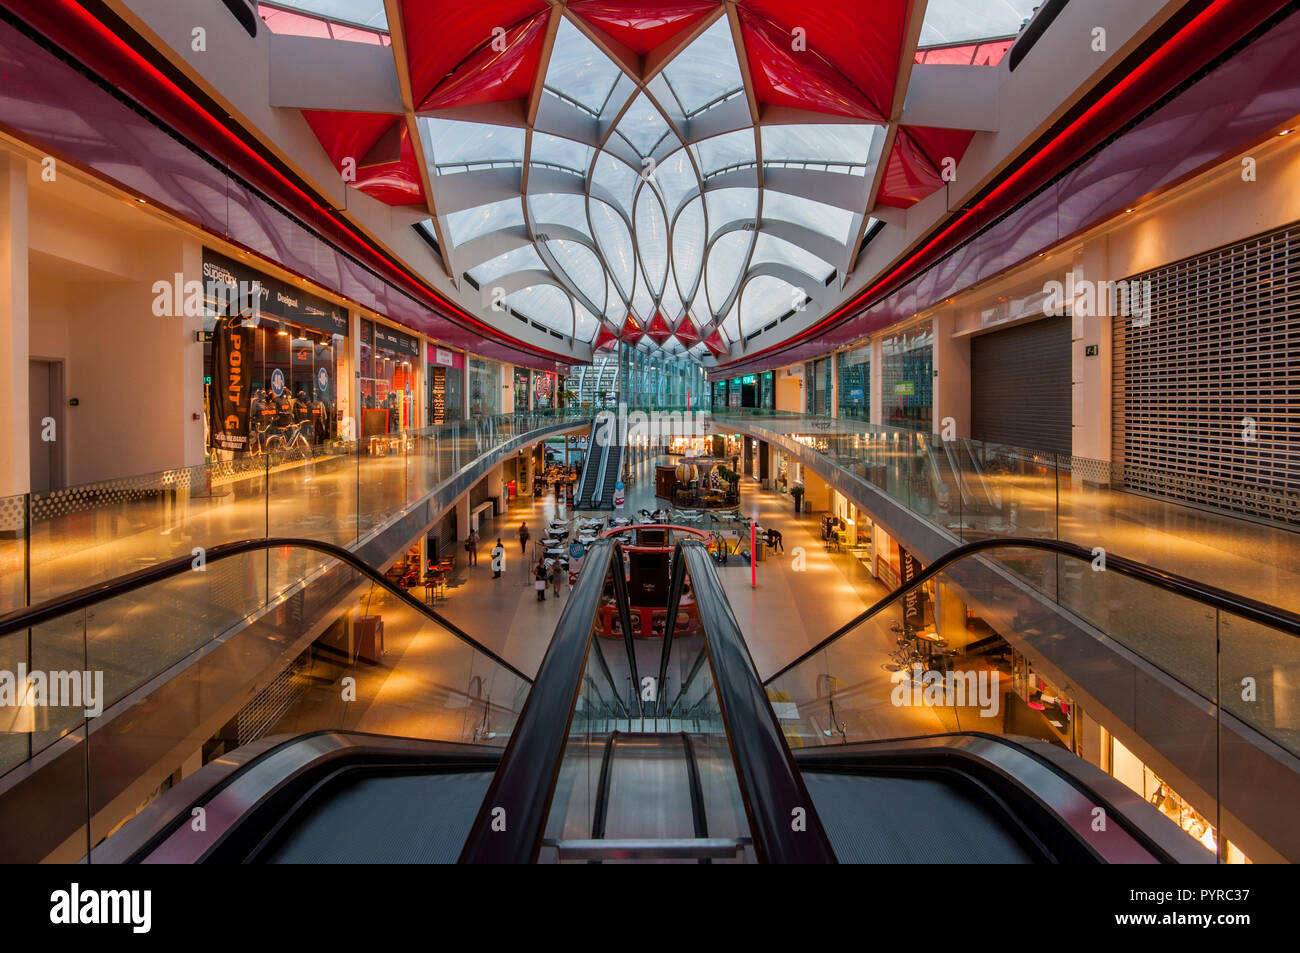 Interior of the Mediacité Shoppingmall in Liege, Belgium Stock Photo ...